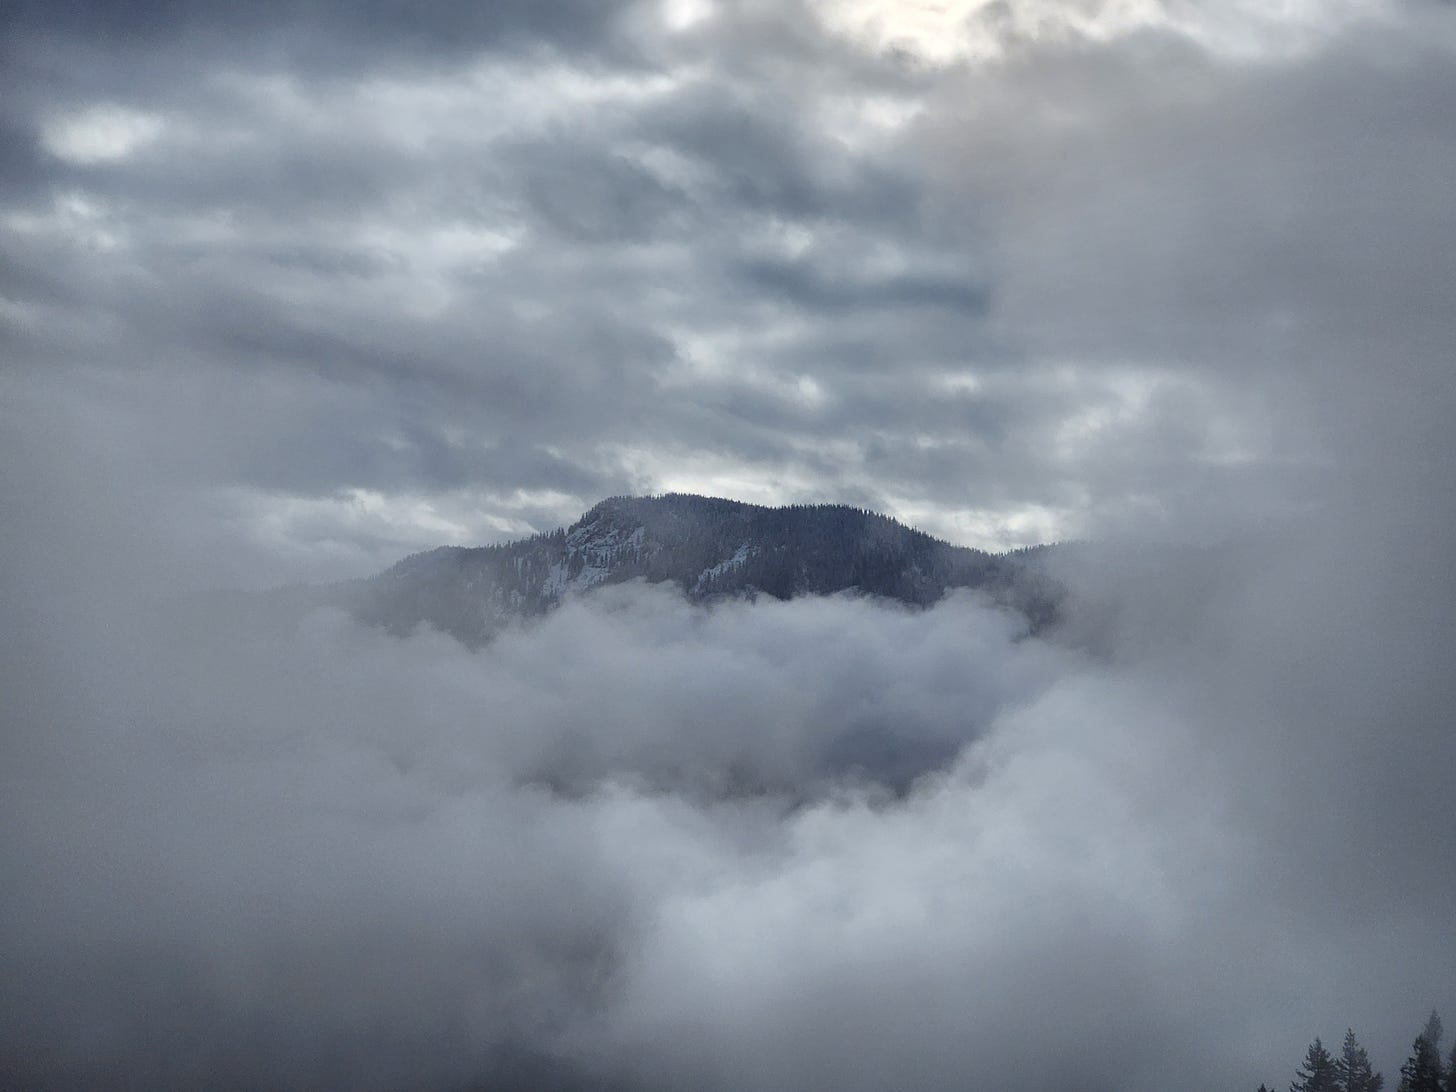 ridgetop emerging through low clouds